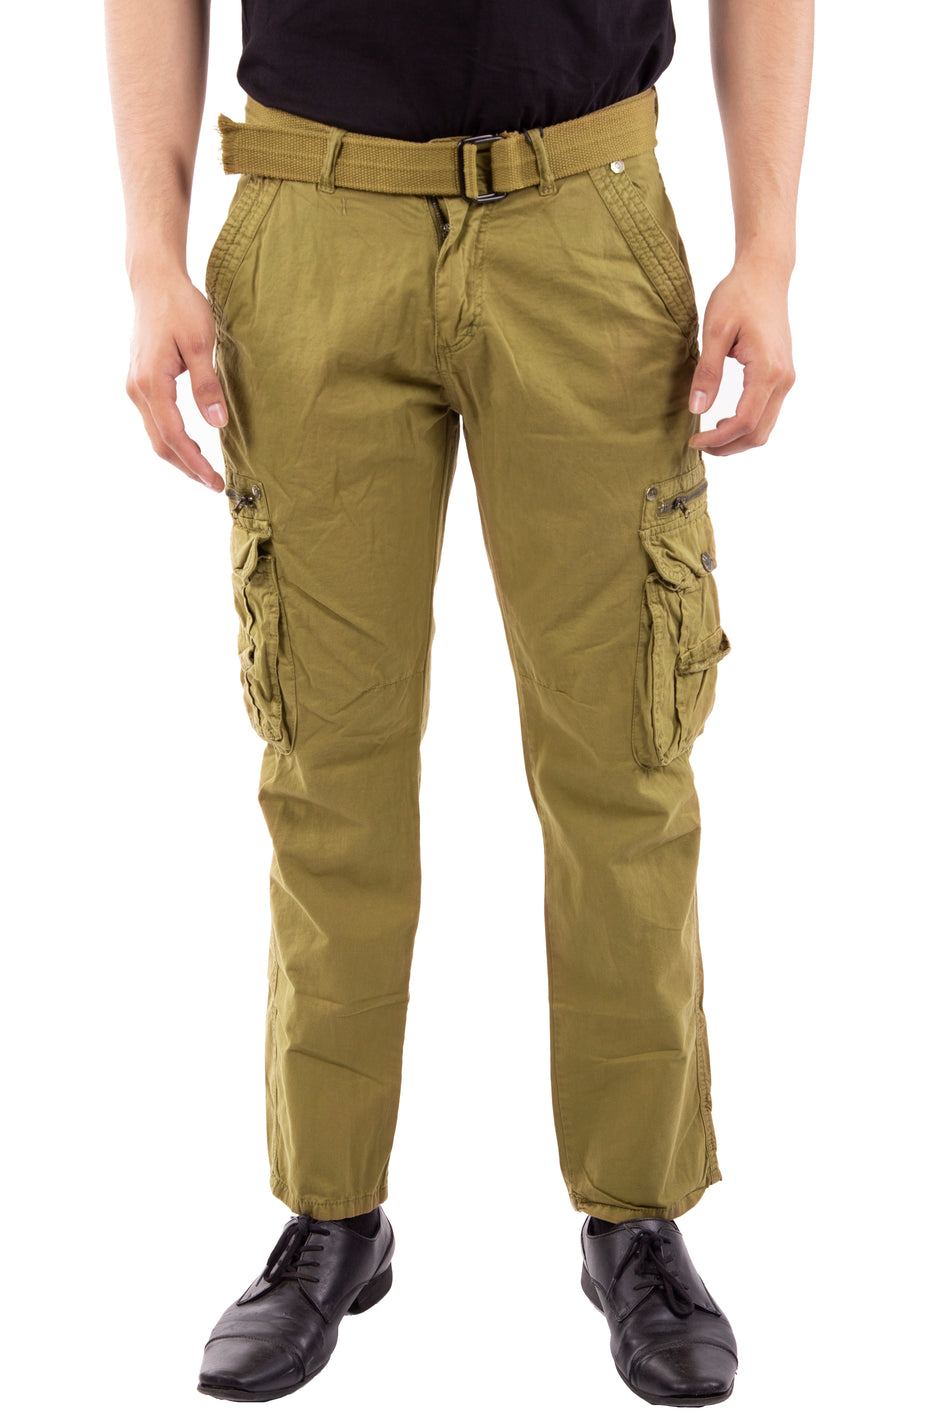 Men's Cargo Pant Olive with Belt